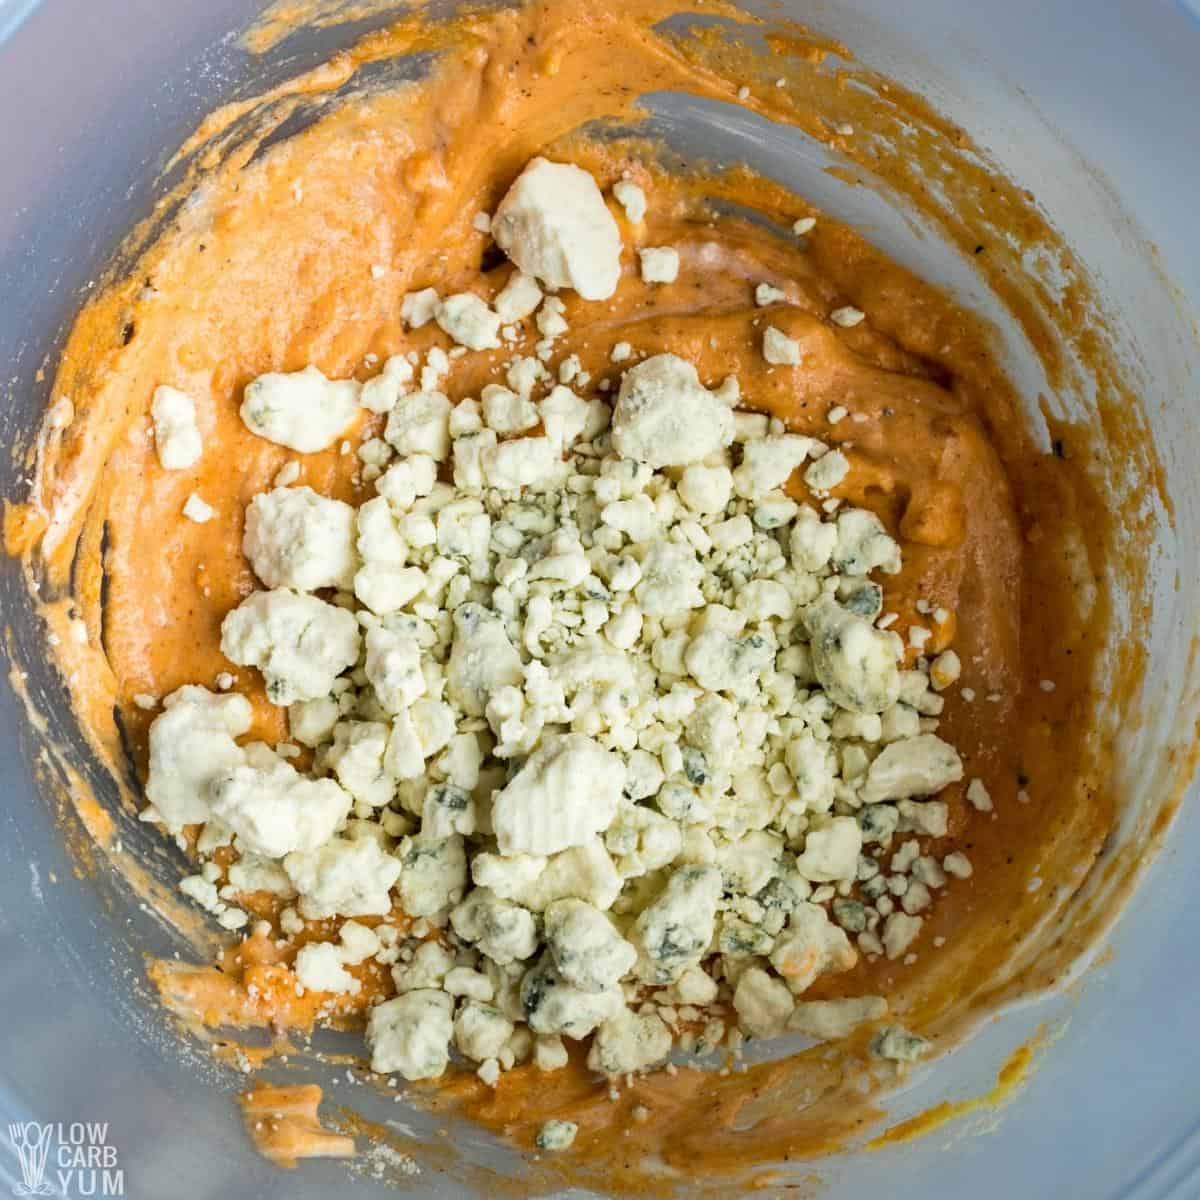 adding blue cheese to seasoned mixture.